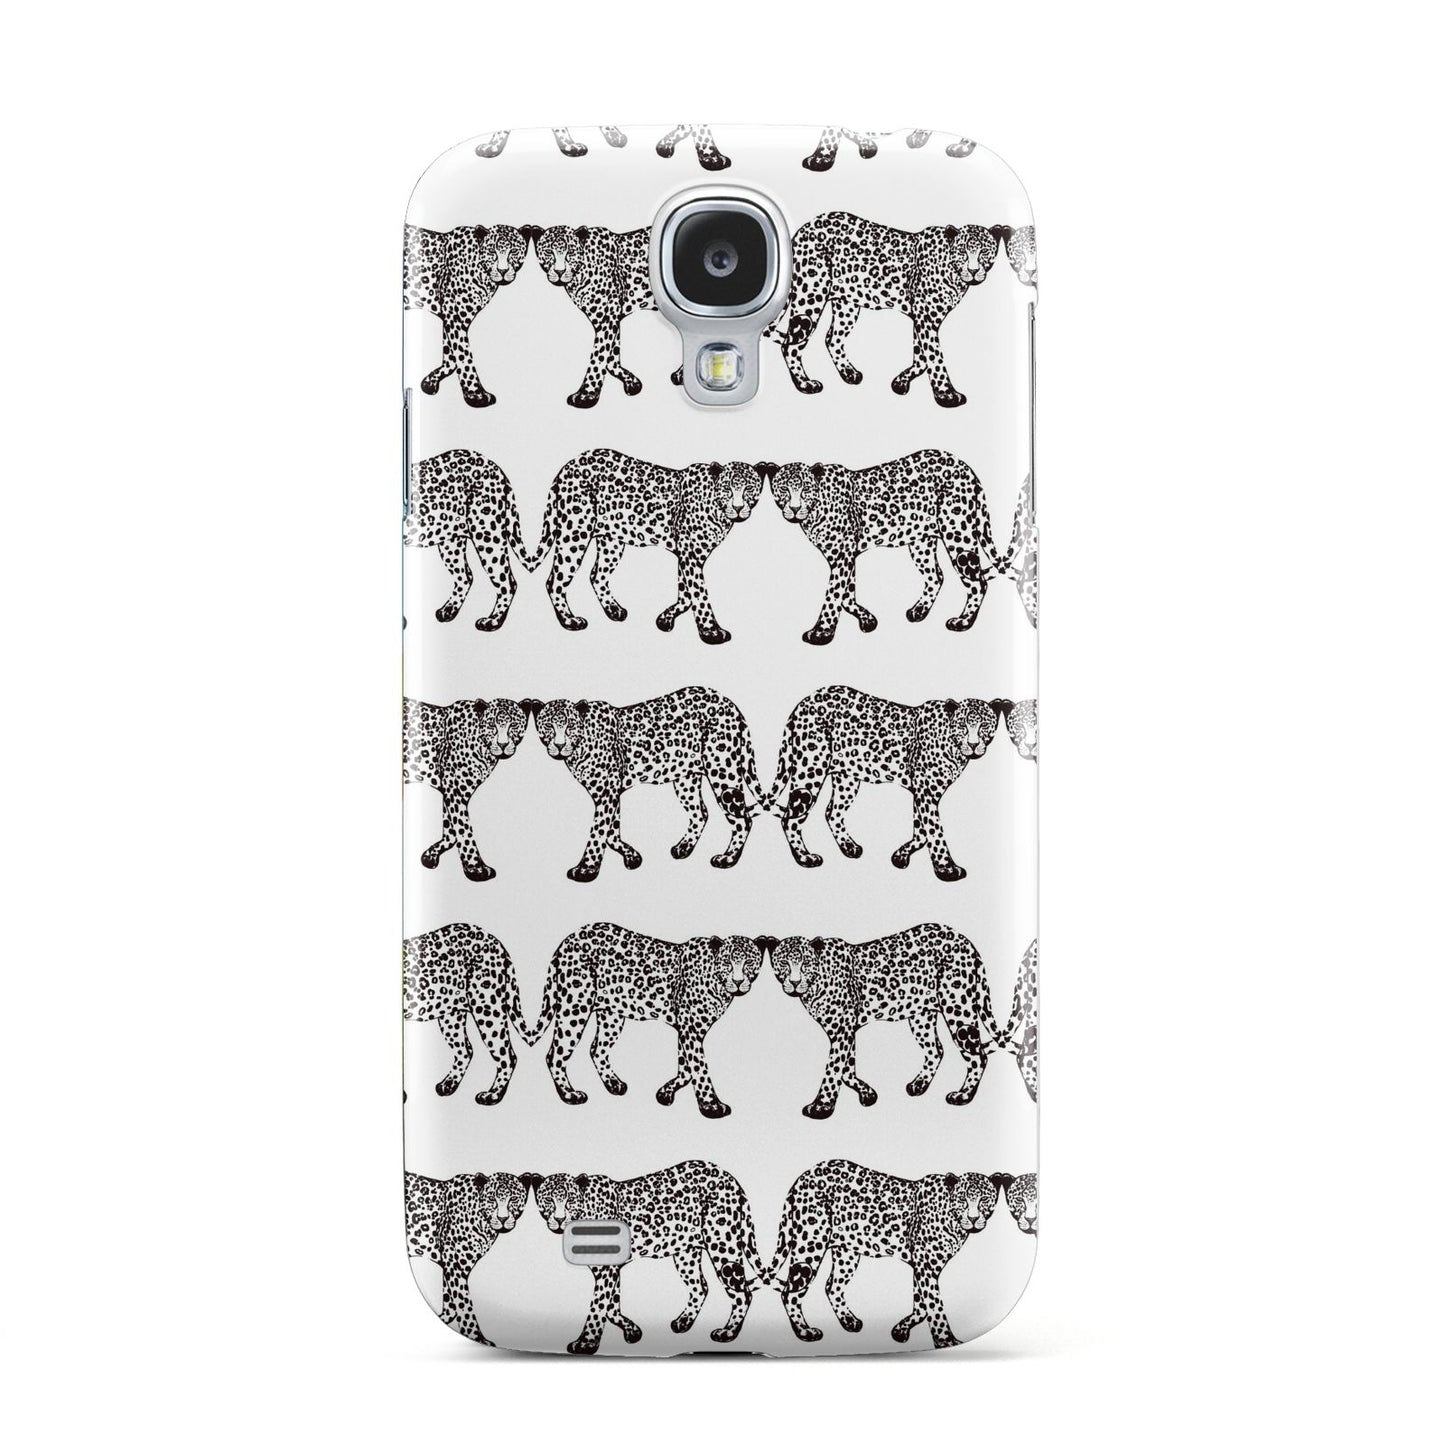 Monochrome Mirrored Leopard Print Samsung Galaxy S4 Case